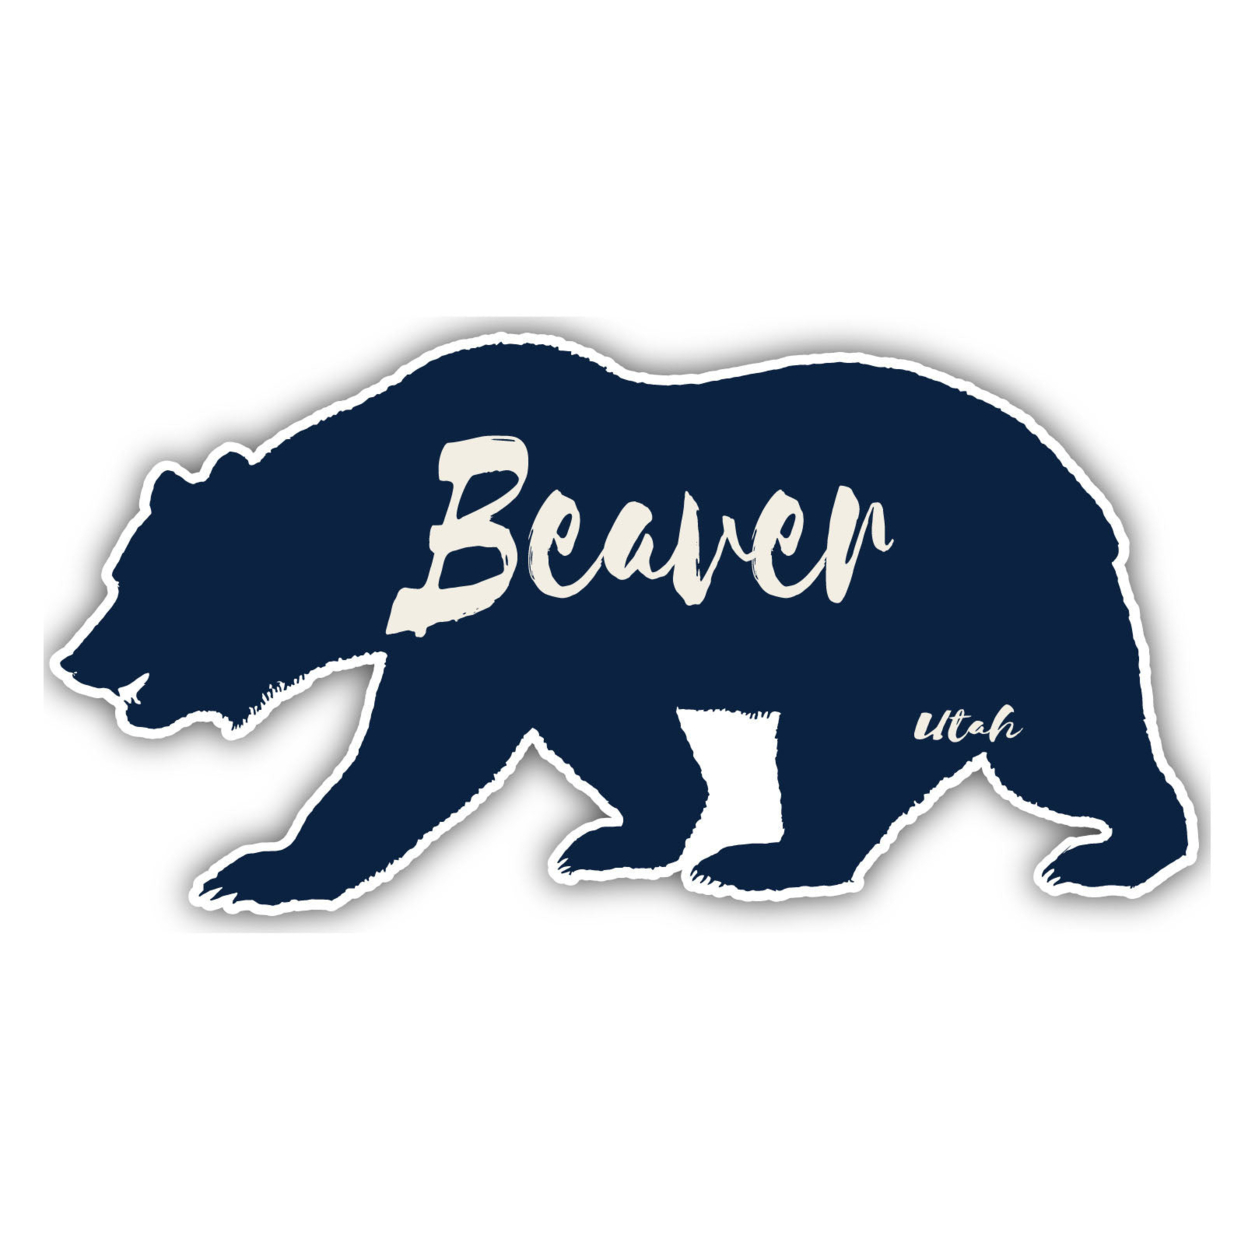 Beaver Utah Souvenir Decorative Stickers (Choose Theme And Size) - Single Unit, 6-Inch, Tent